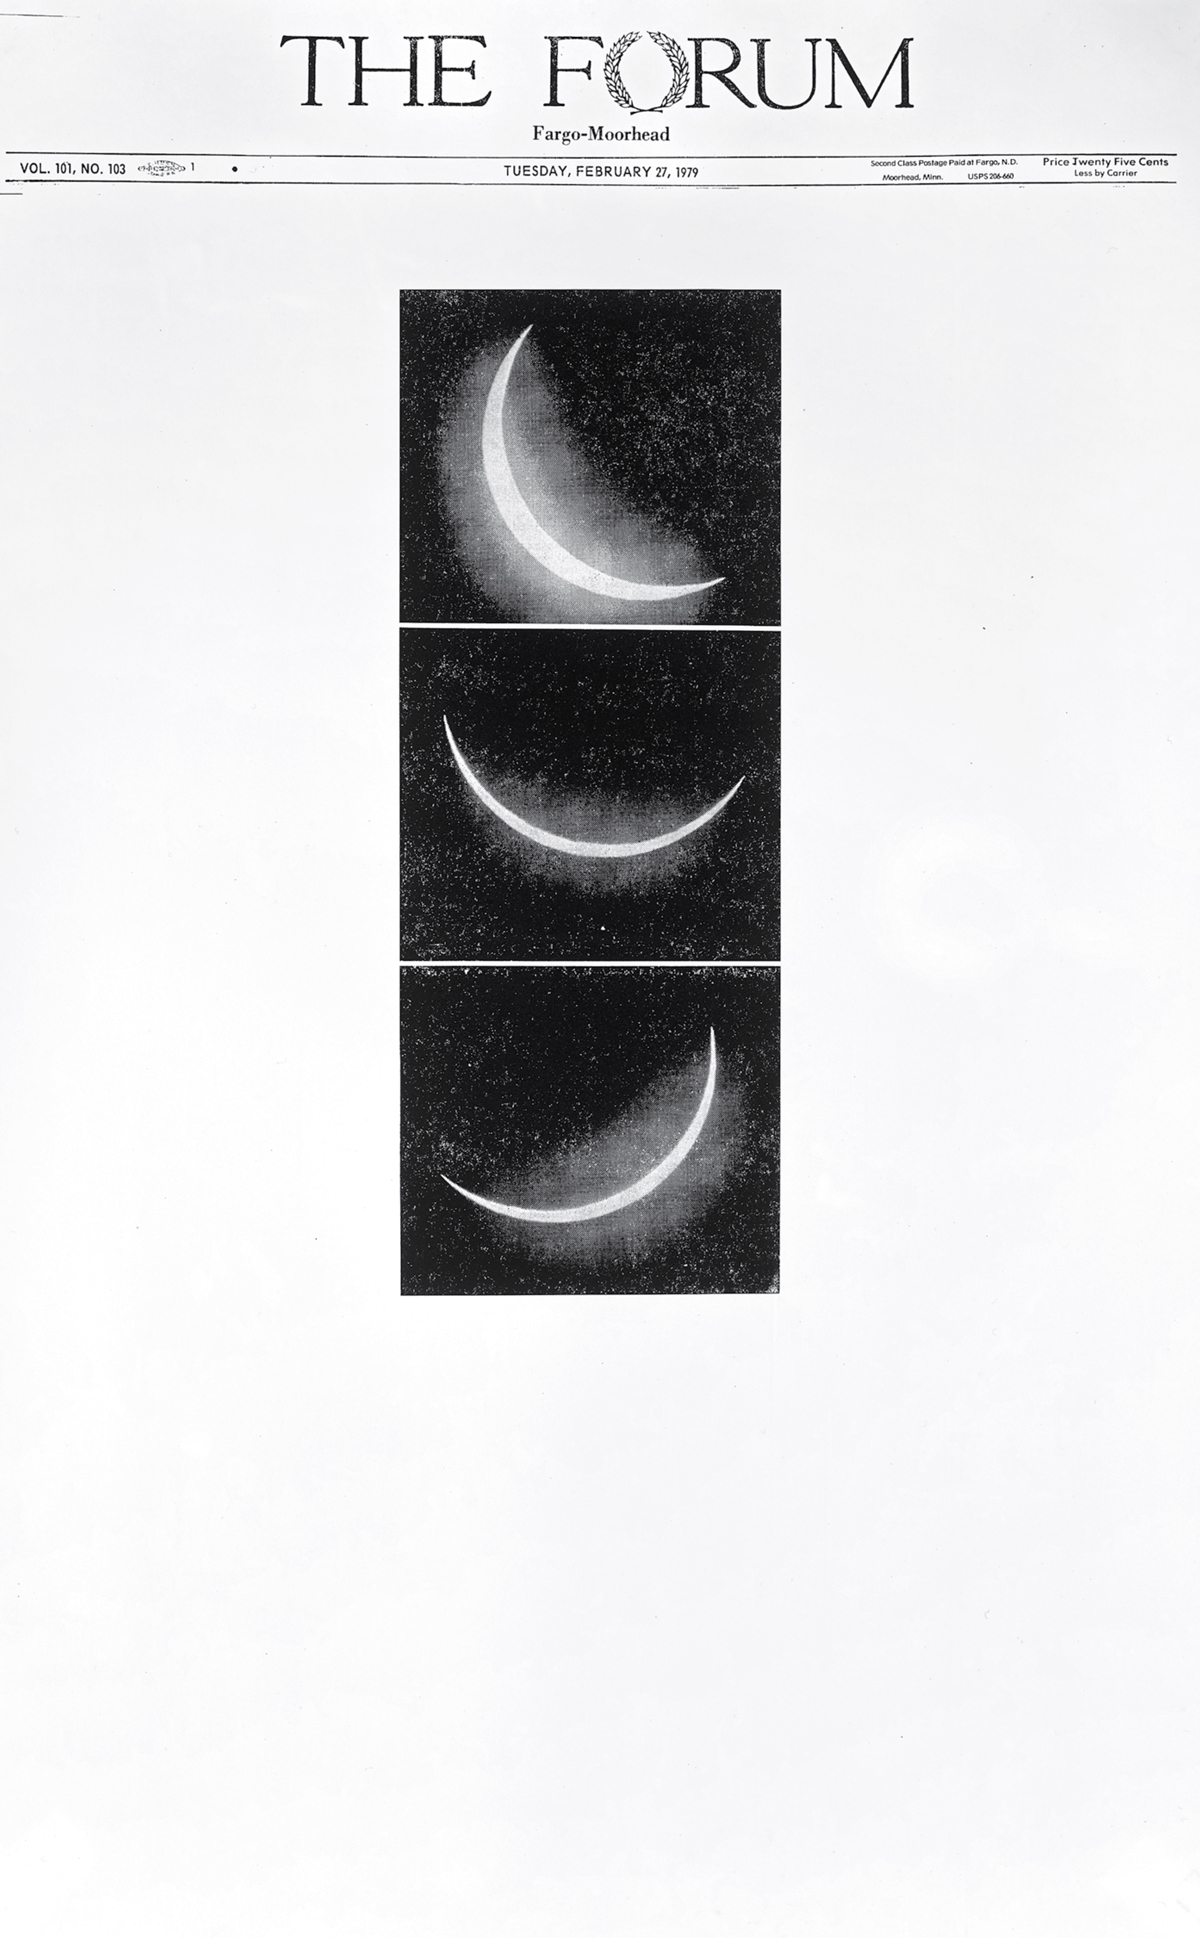 Sarah Charlesworth, 'Arc of Total Eclipse, February 26, 1979' (detail), 1979/2010.